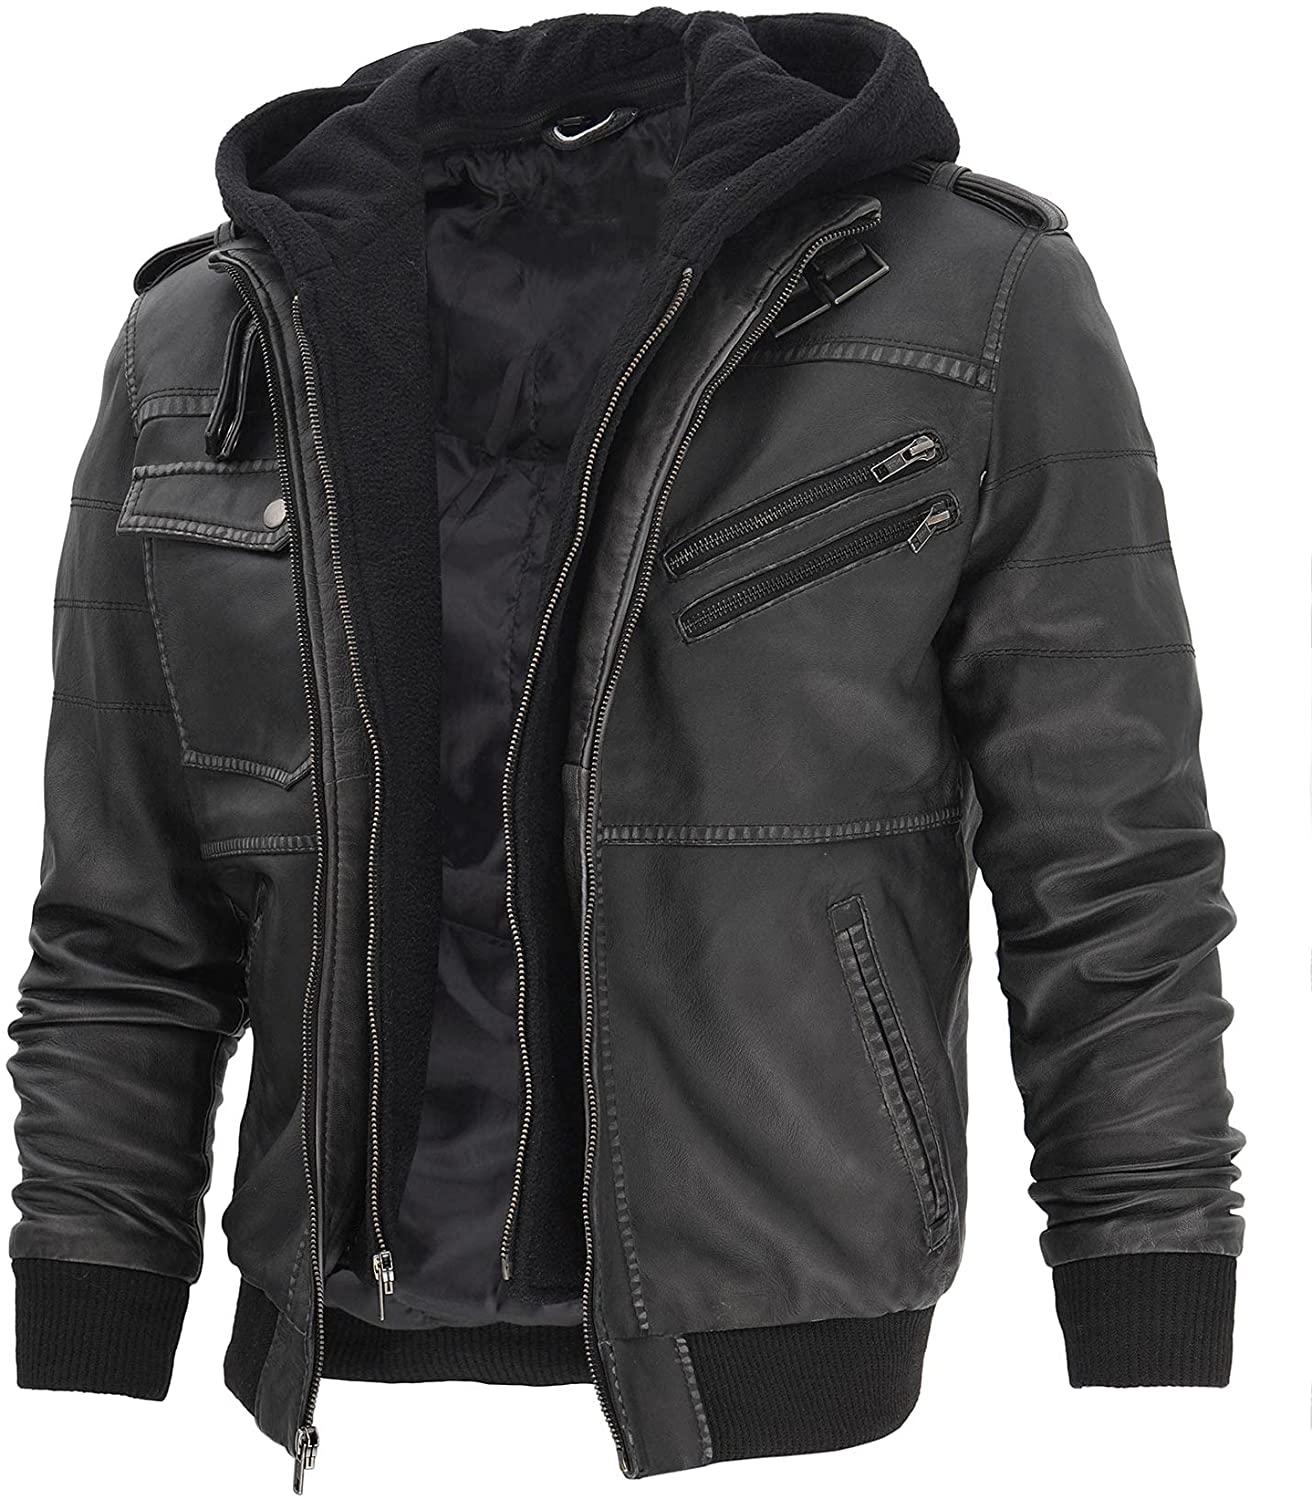 Decrum Suede Jacket Mens - Black Leather Jackets For Men